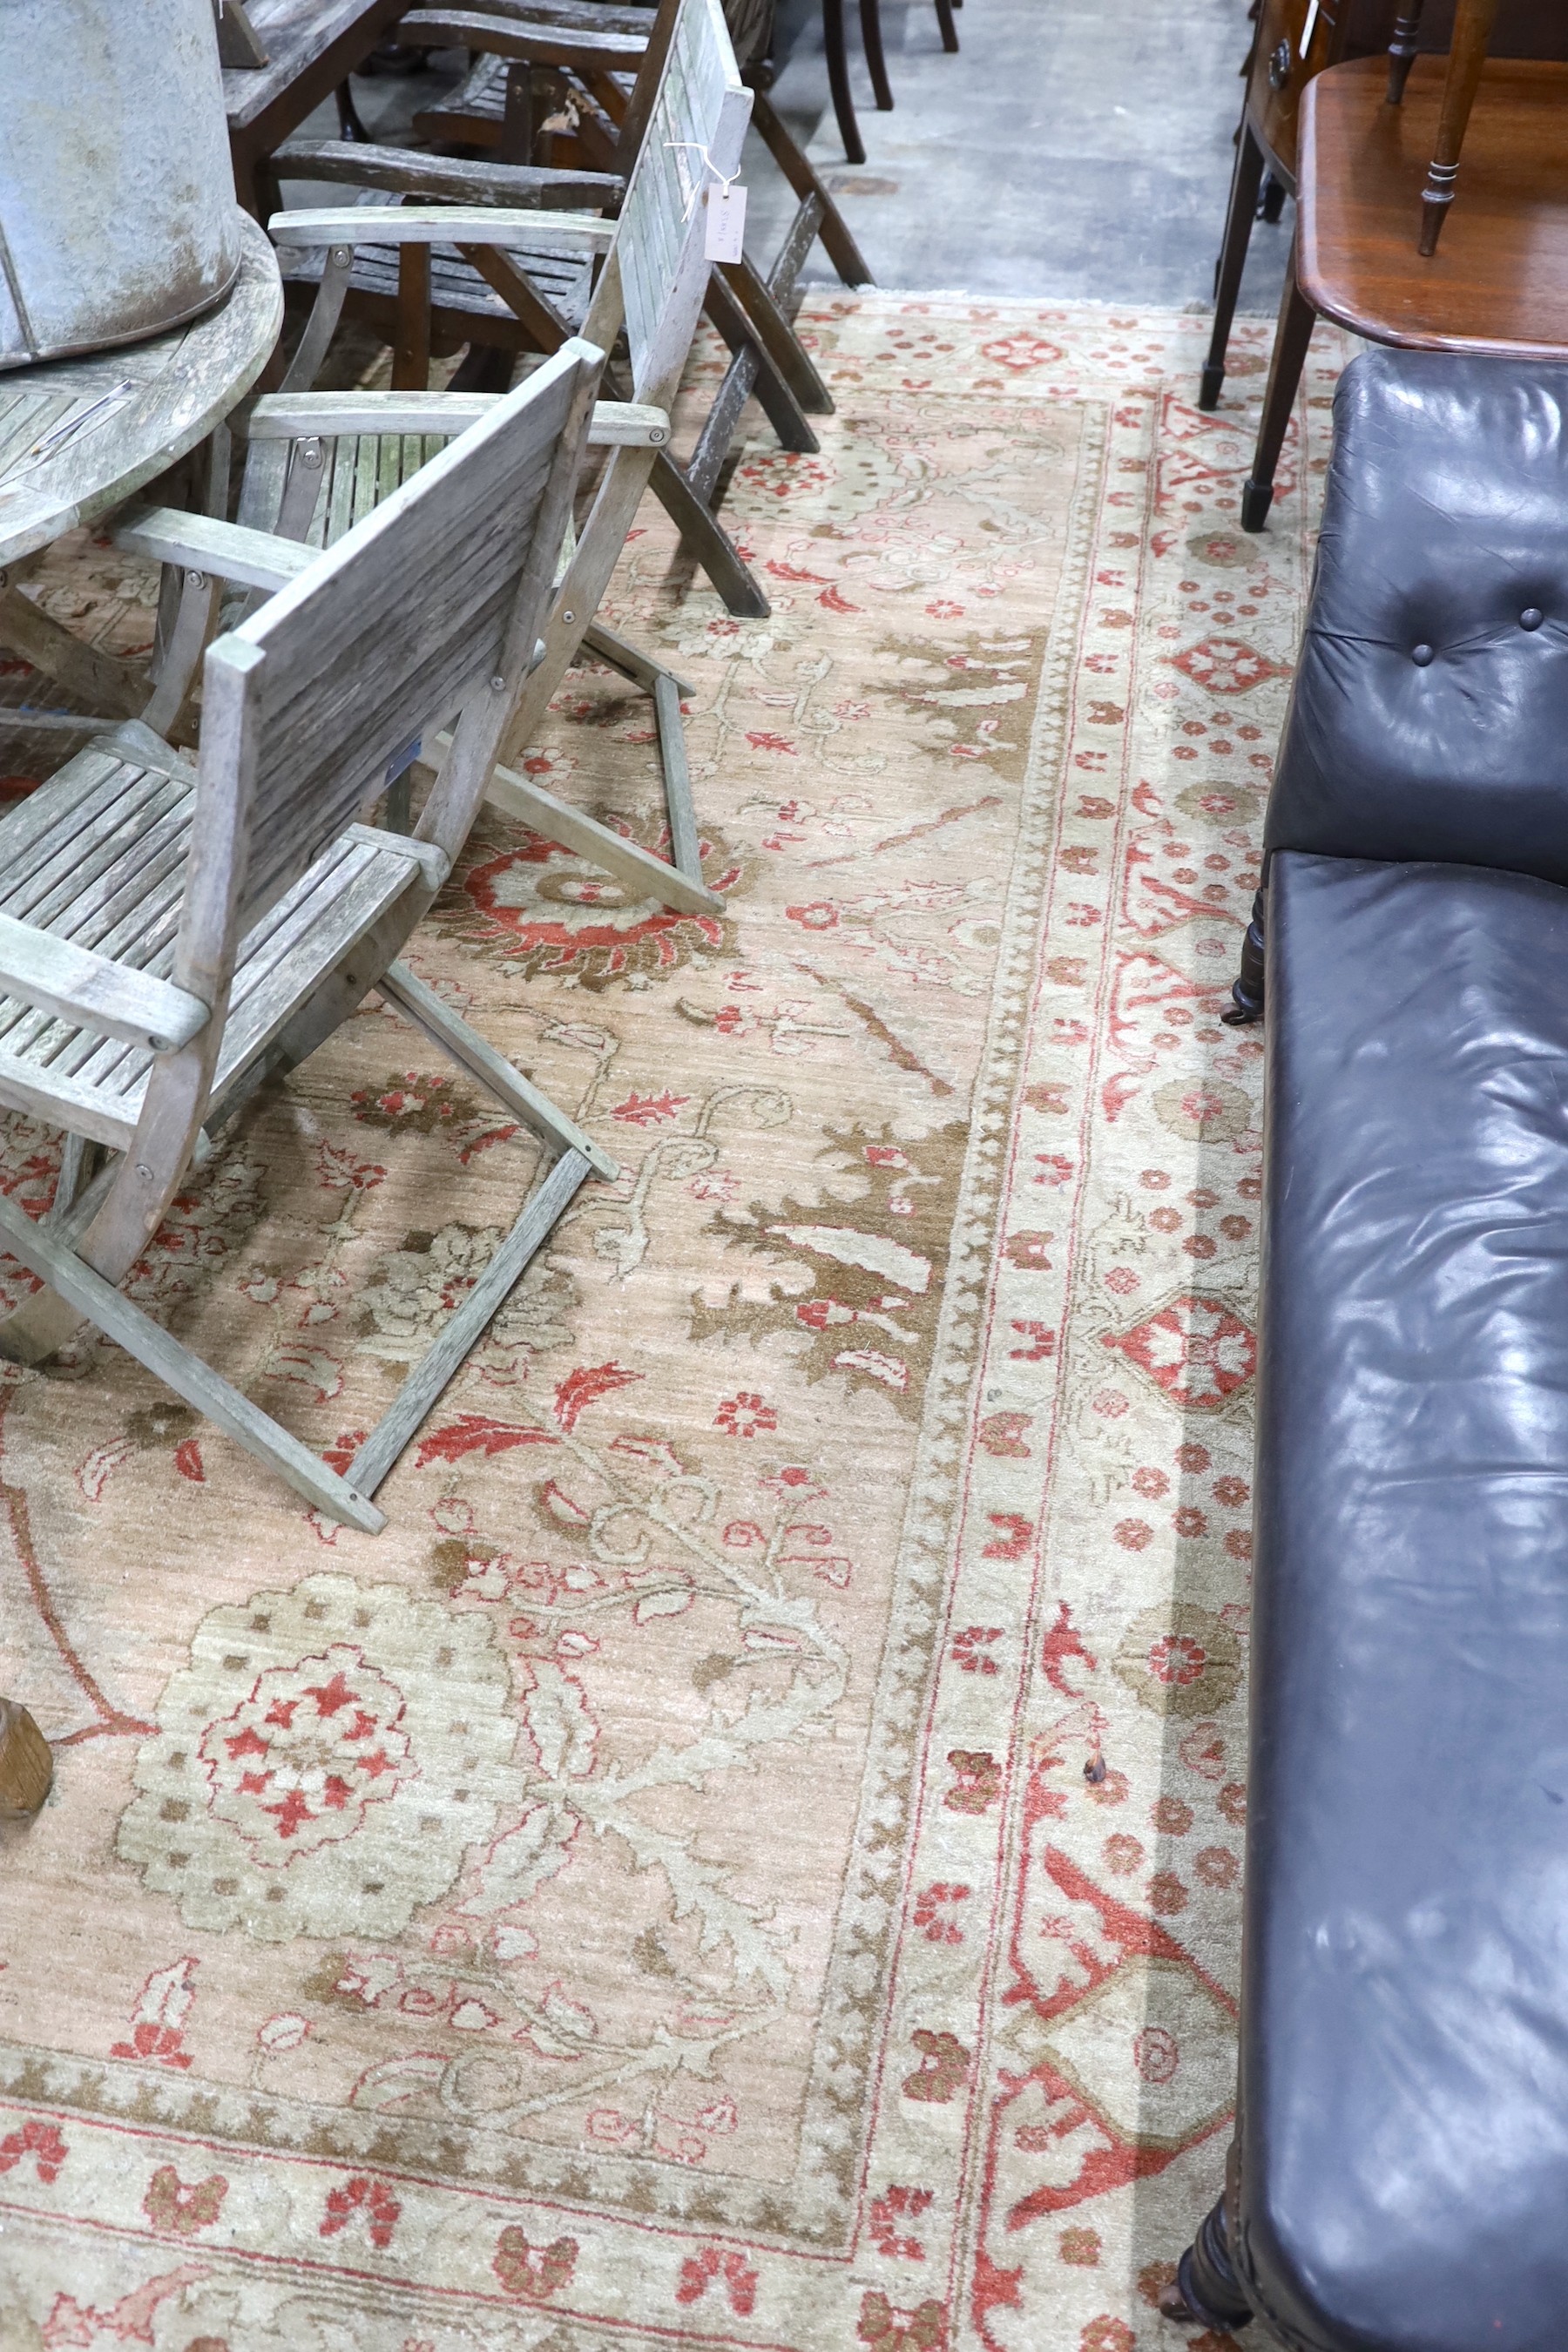 A Zeigler style ivory ground carpet, 380 x 280cm